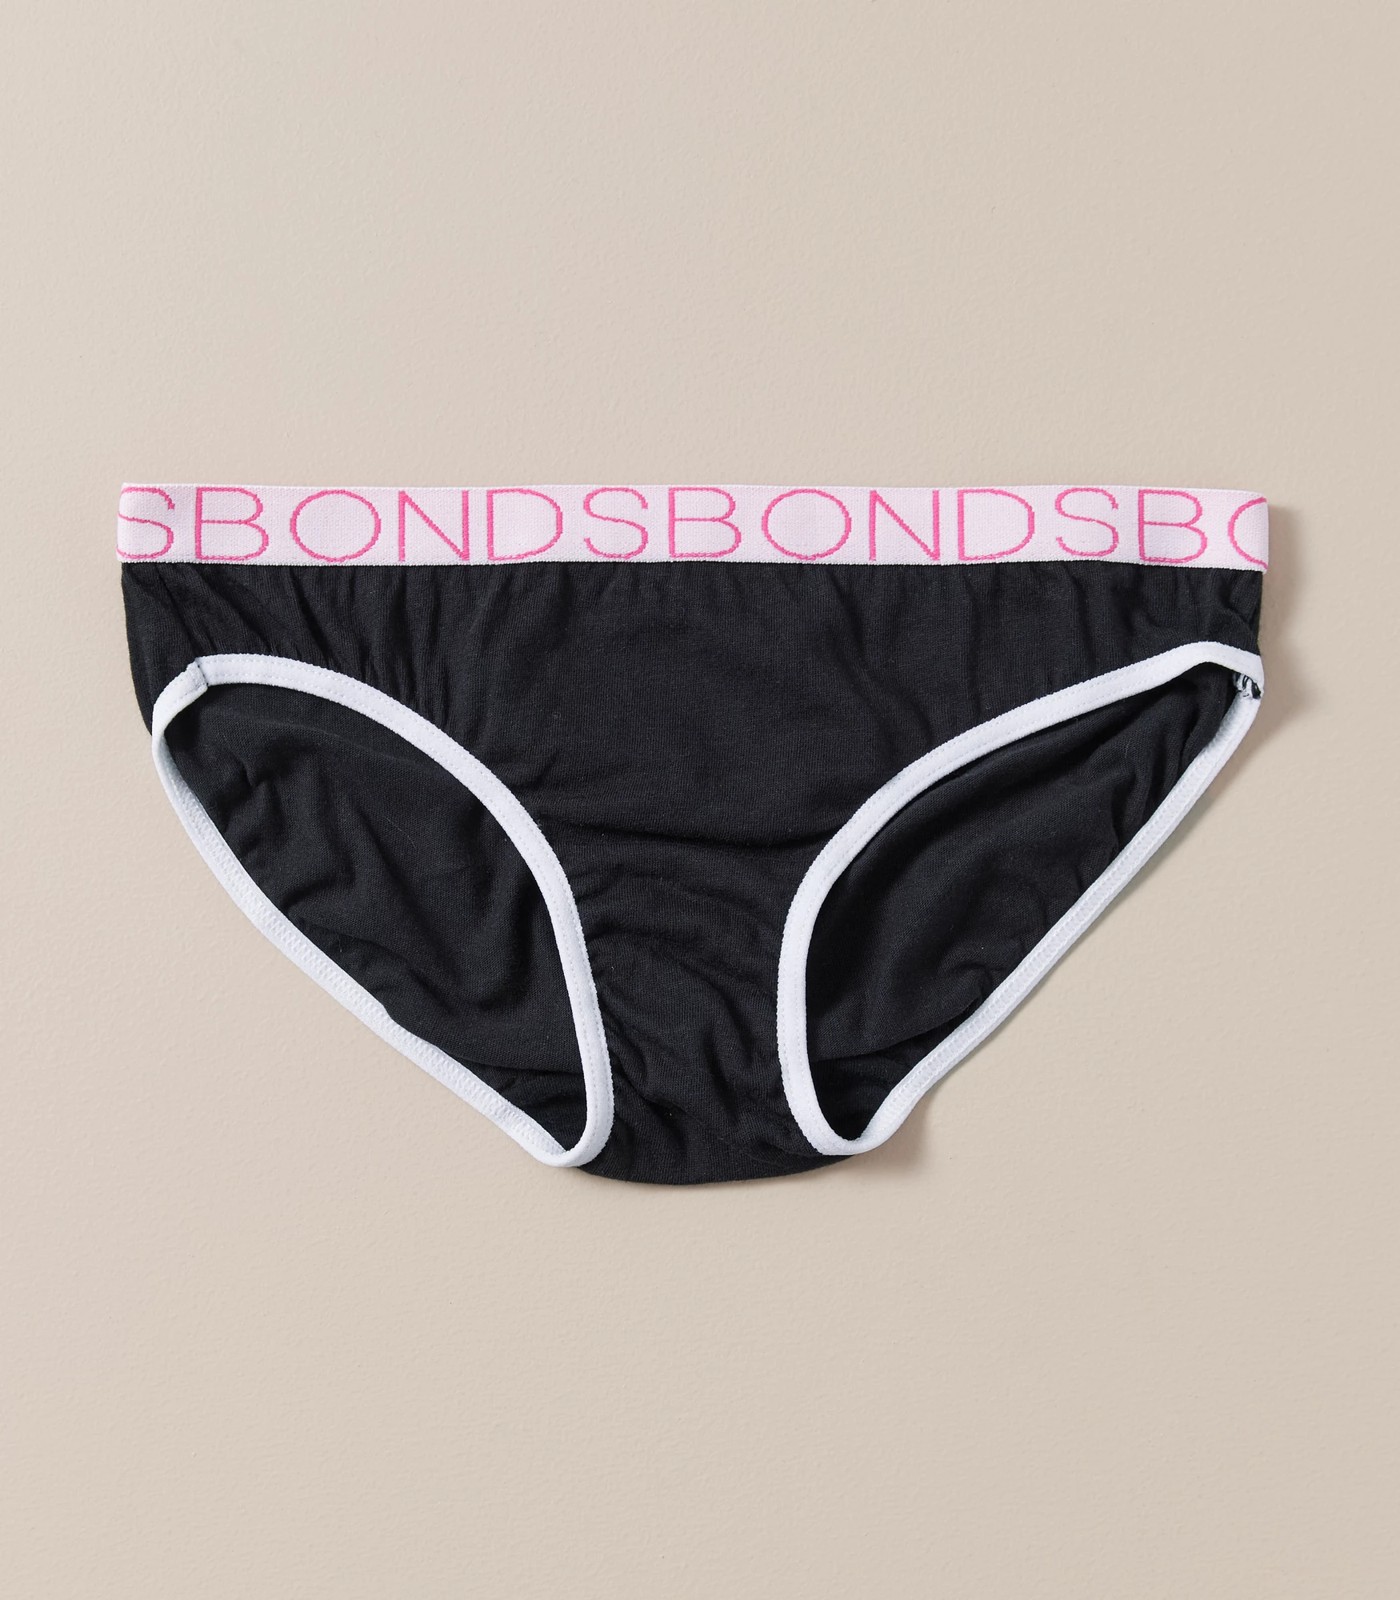 Bonds Multi Cotton Bikini Brief, 4-Pack, Stickers, 2-16 - Underwear